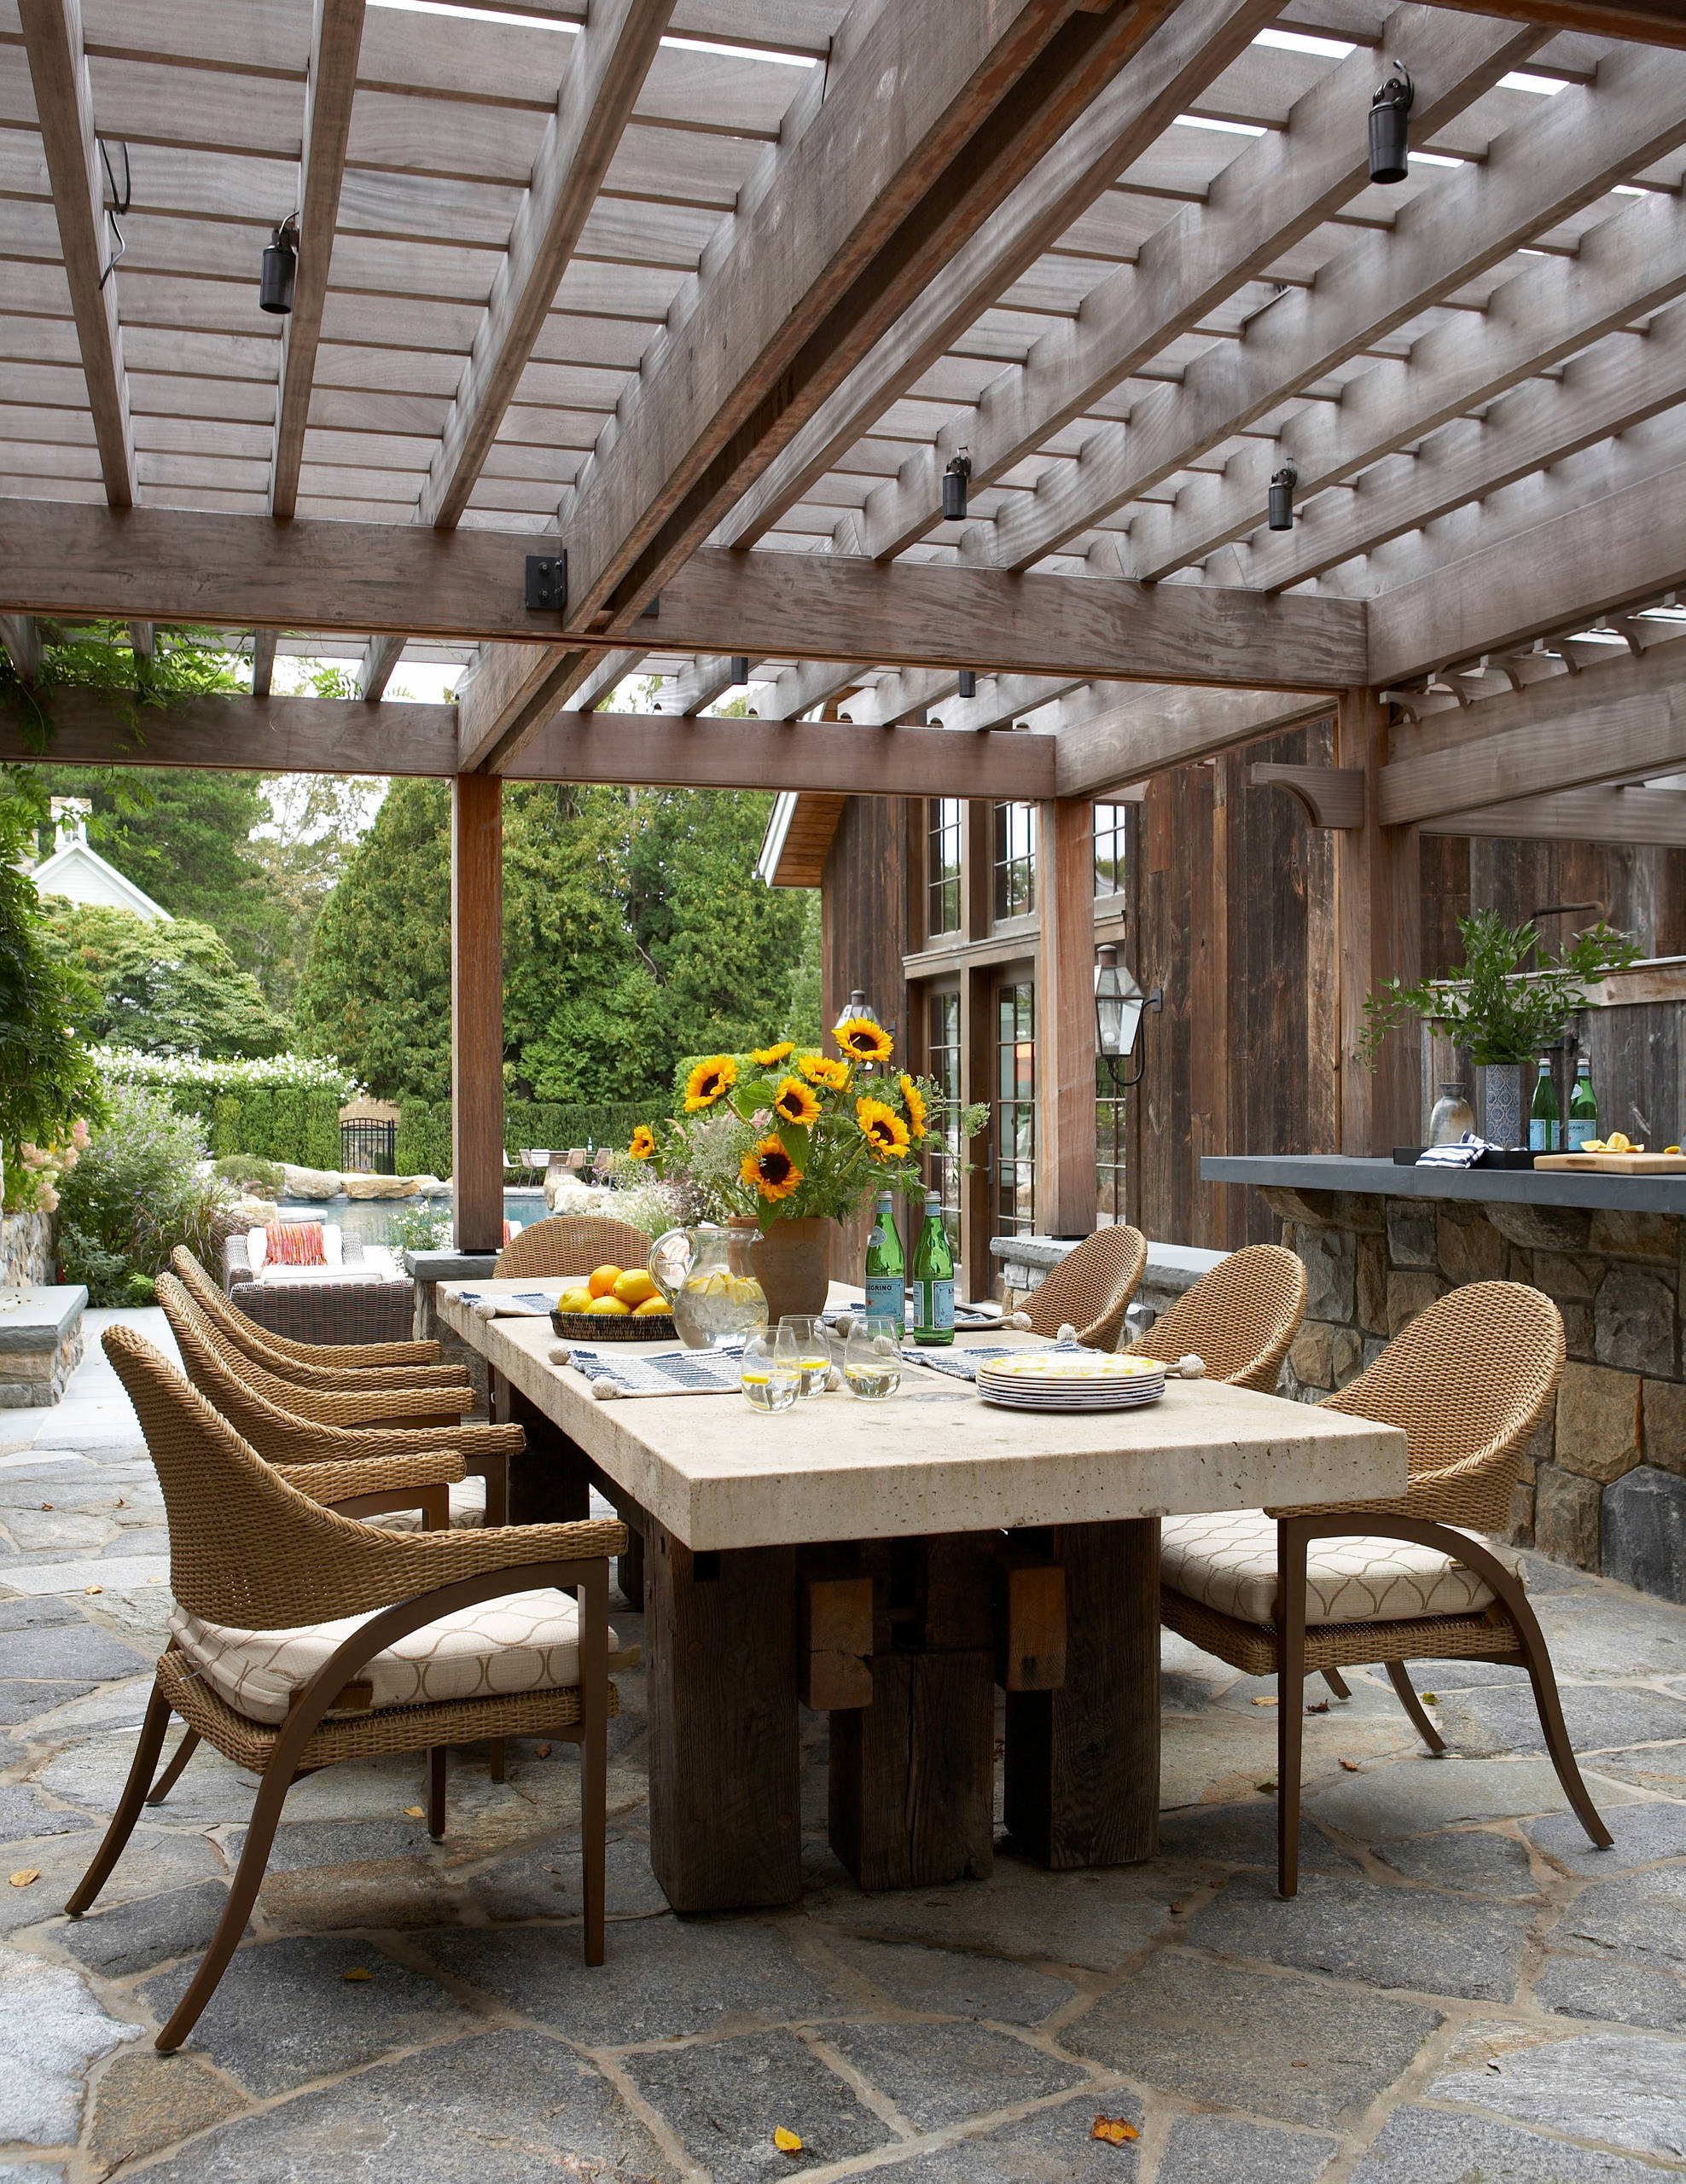 Outdoor Dining Table Centerpiece Ideas - Photos & Ideas | Houzz